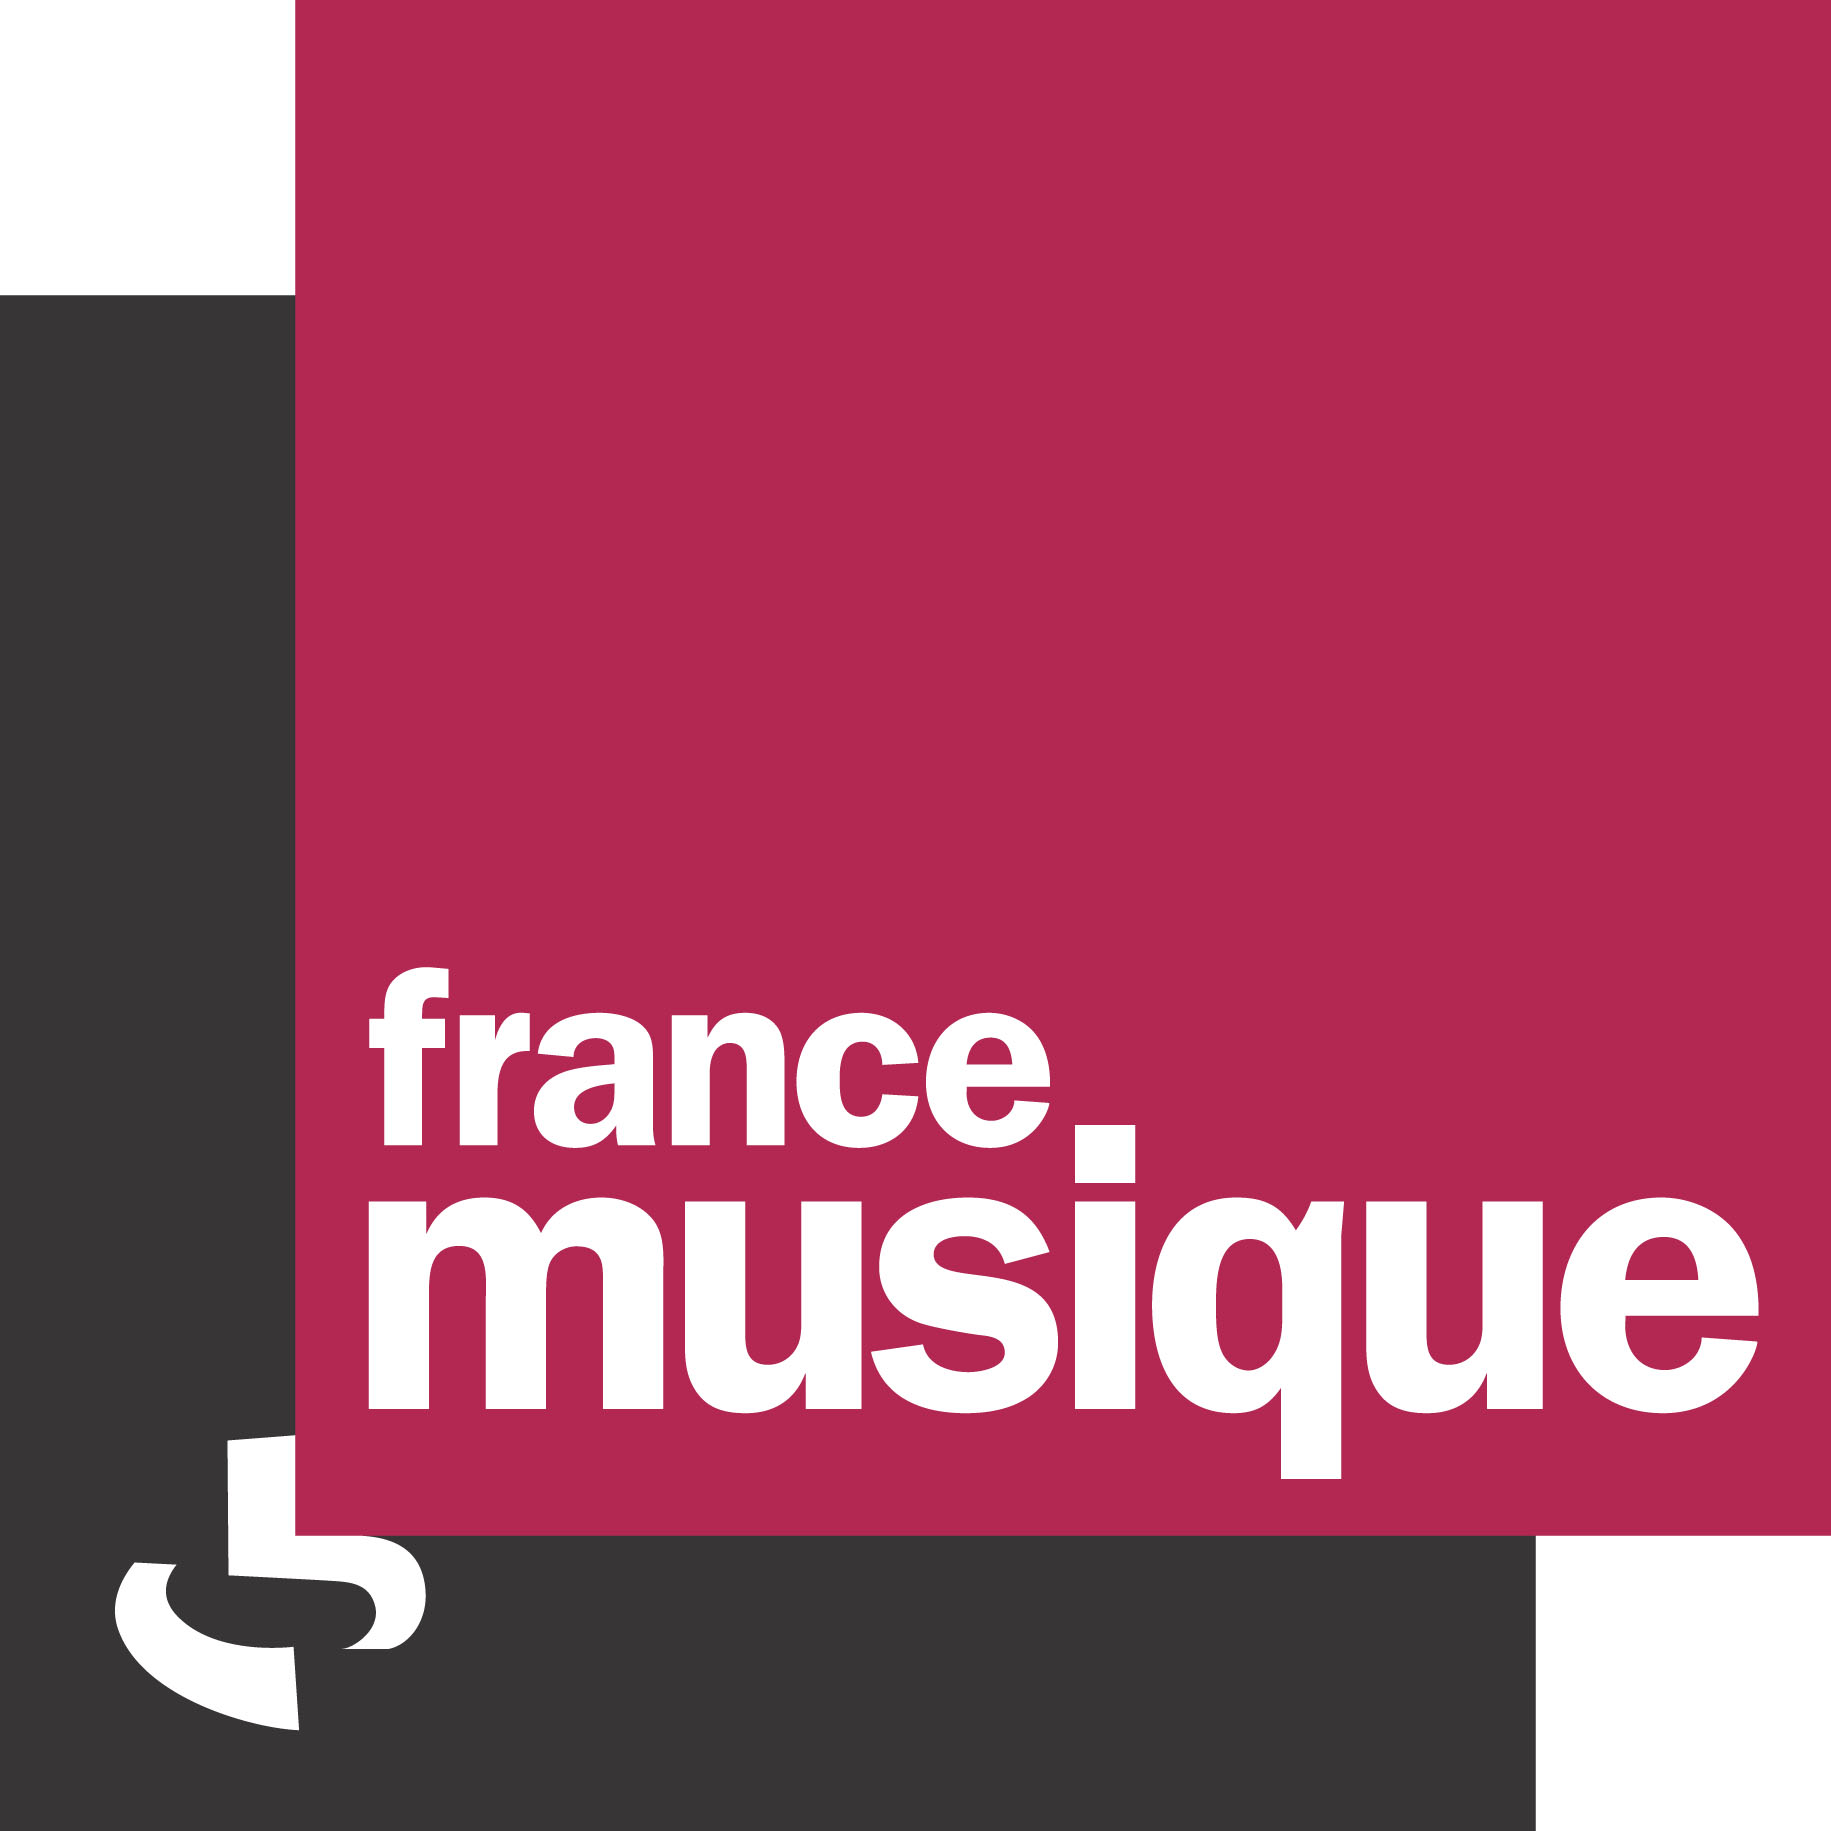 France Musique.jpg